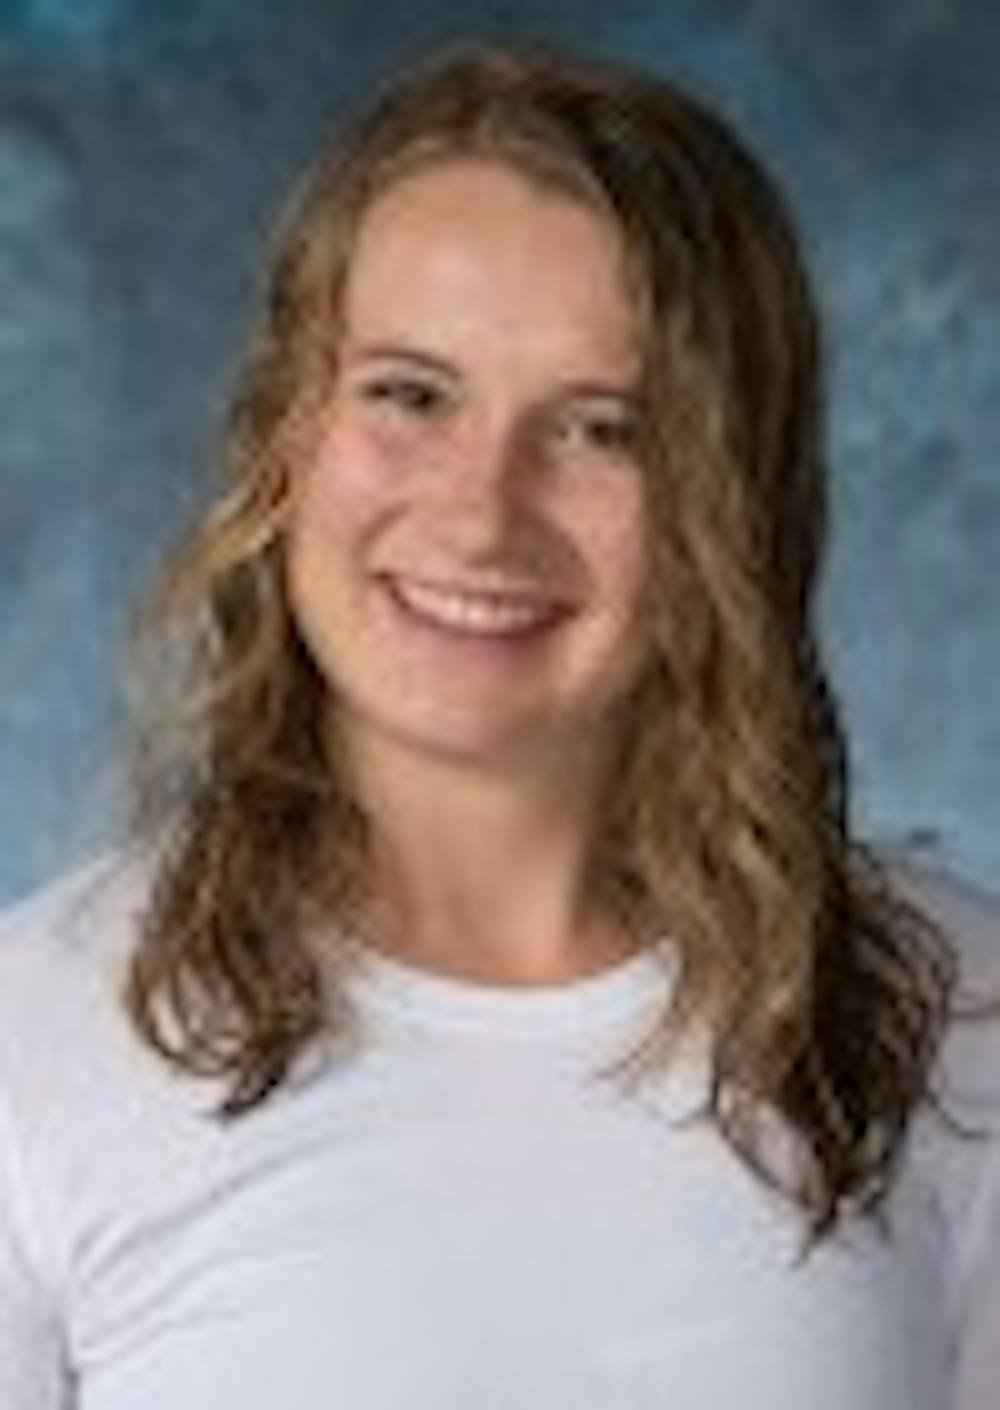 HOPKINSSPORTS.COM
Junior Kristi Rhead is having a great volleyball season.